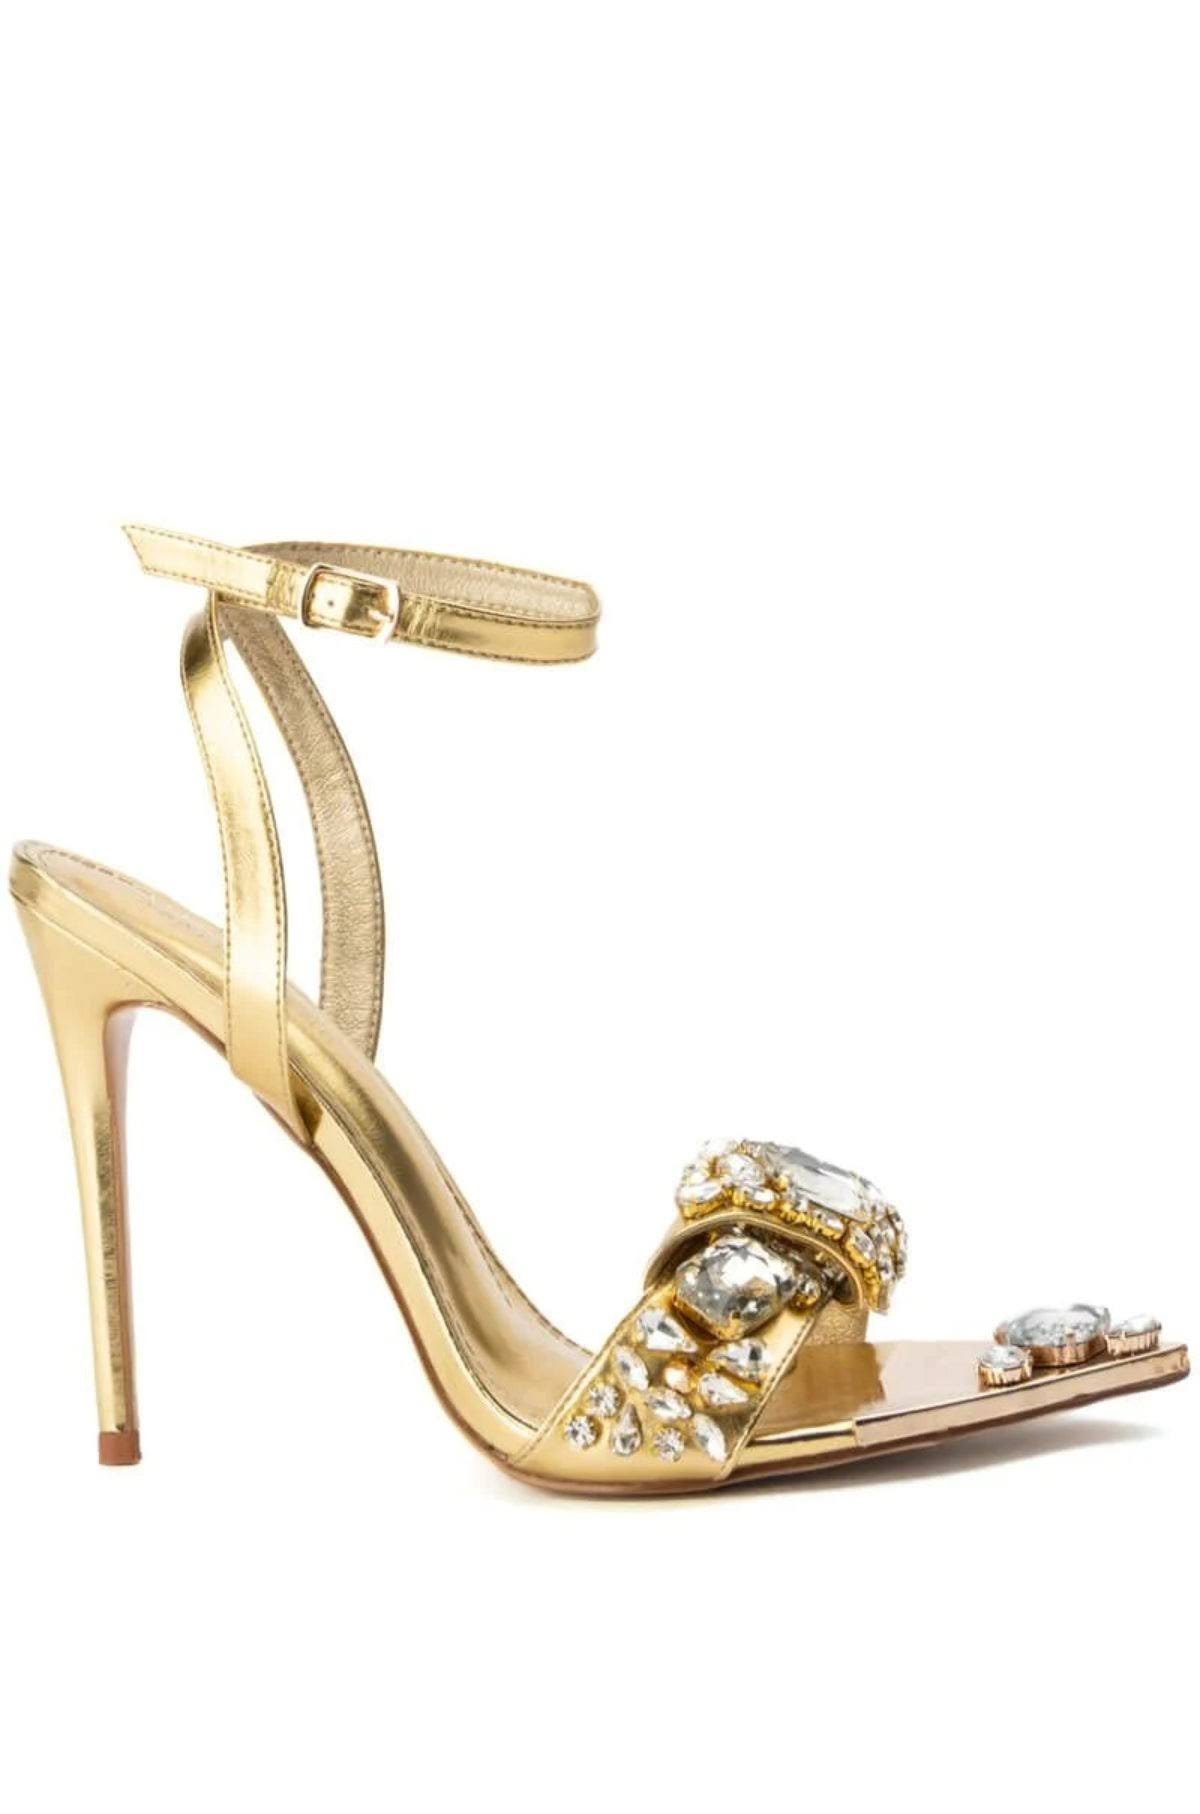 Stylish Gold Crystal Pointed Toe Stiletto Sandals | Image